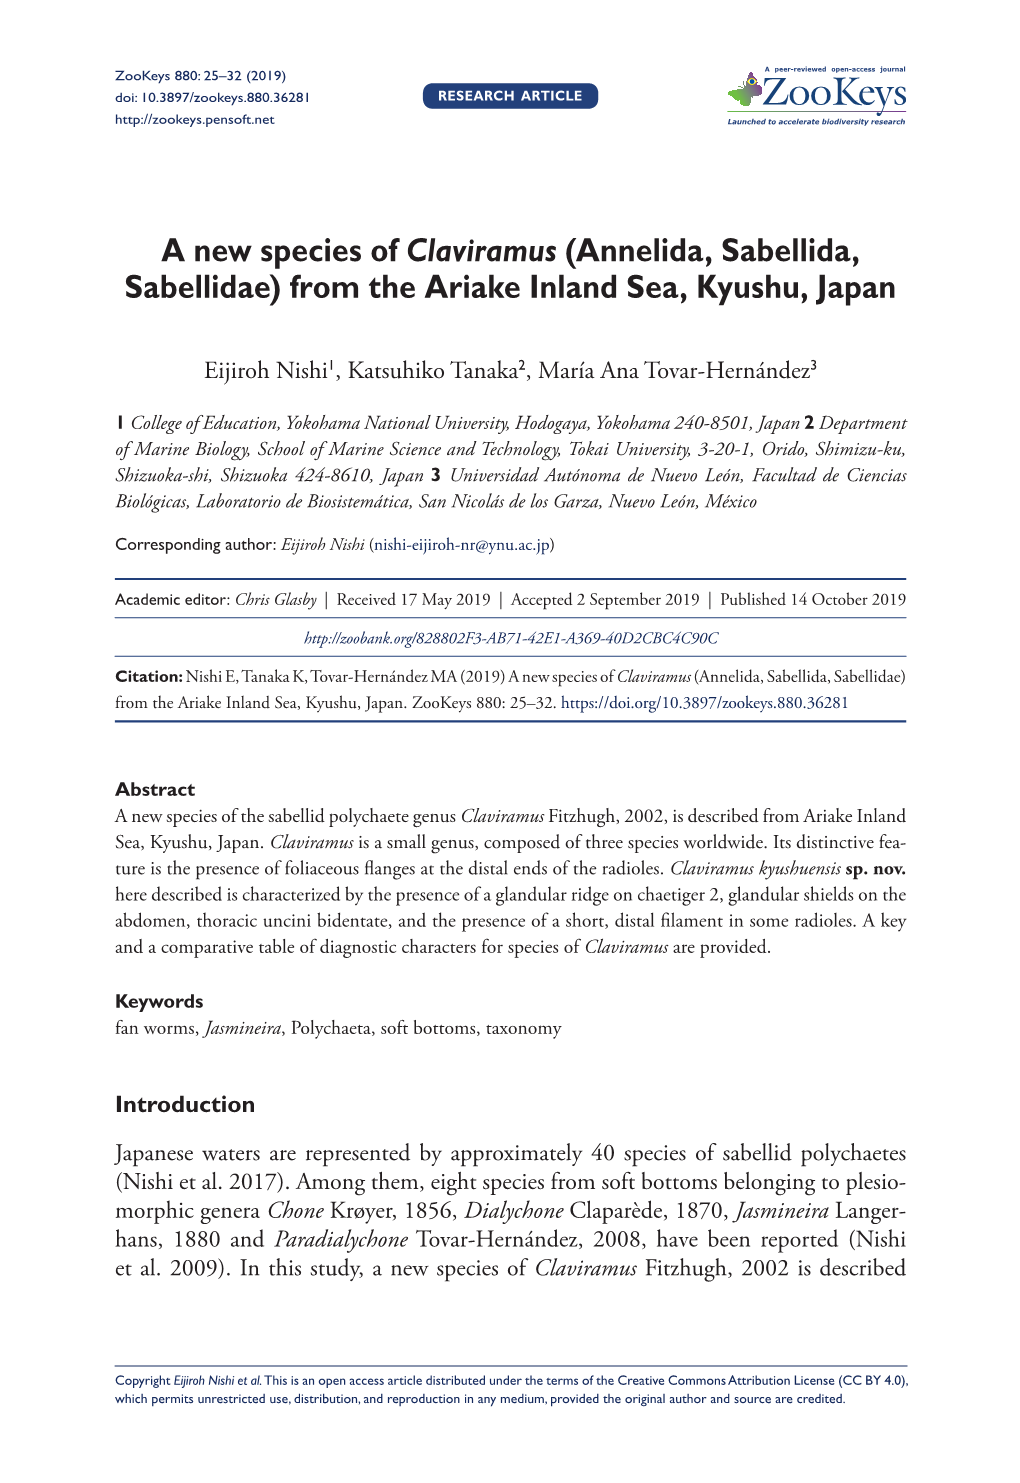 A New Species of Claviramus (Annelida, Sabellida, Sabellidae) from the Ariake Inland Sea, Kyushu, Japan